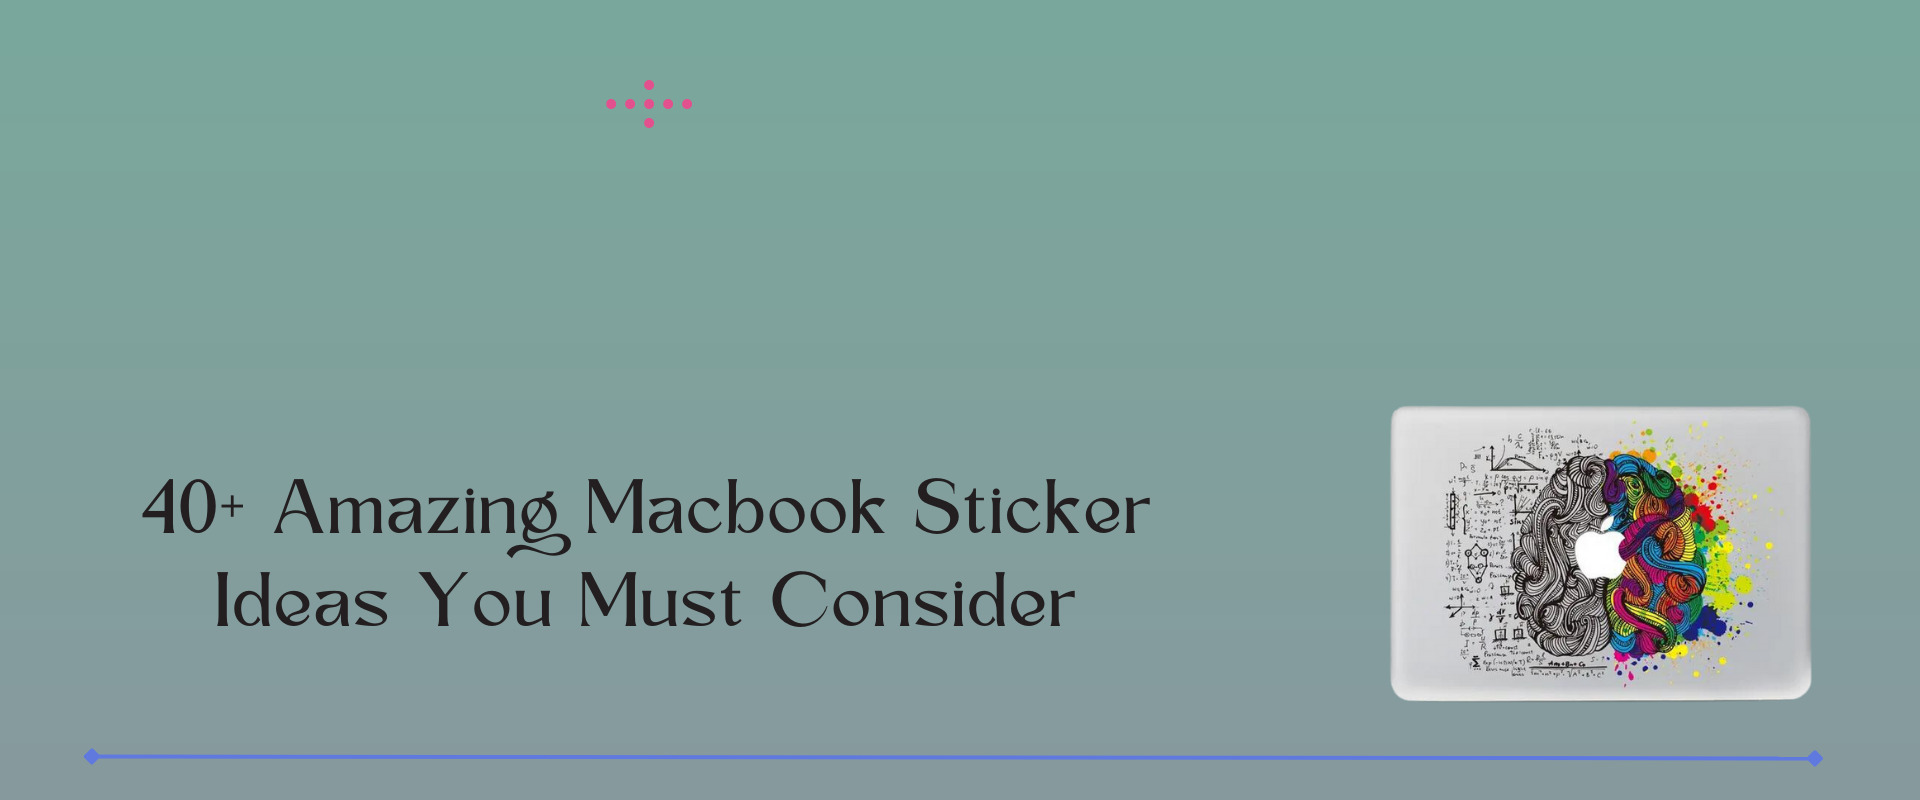 40+ Amazing Macbook Sticker Ideas You Must Consider